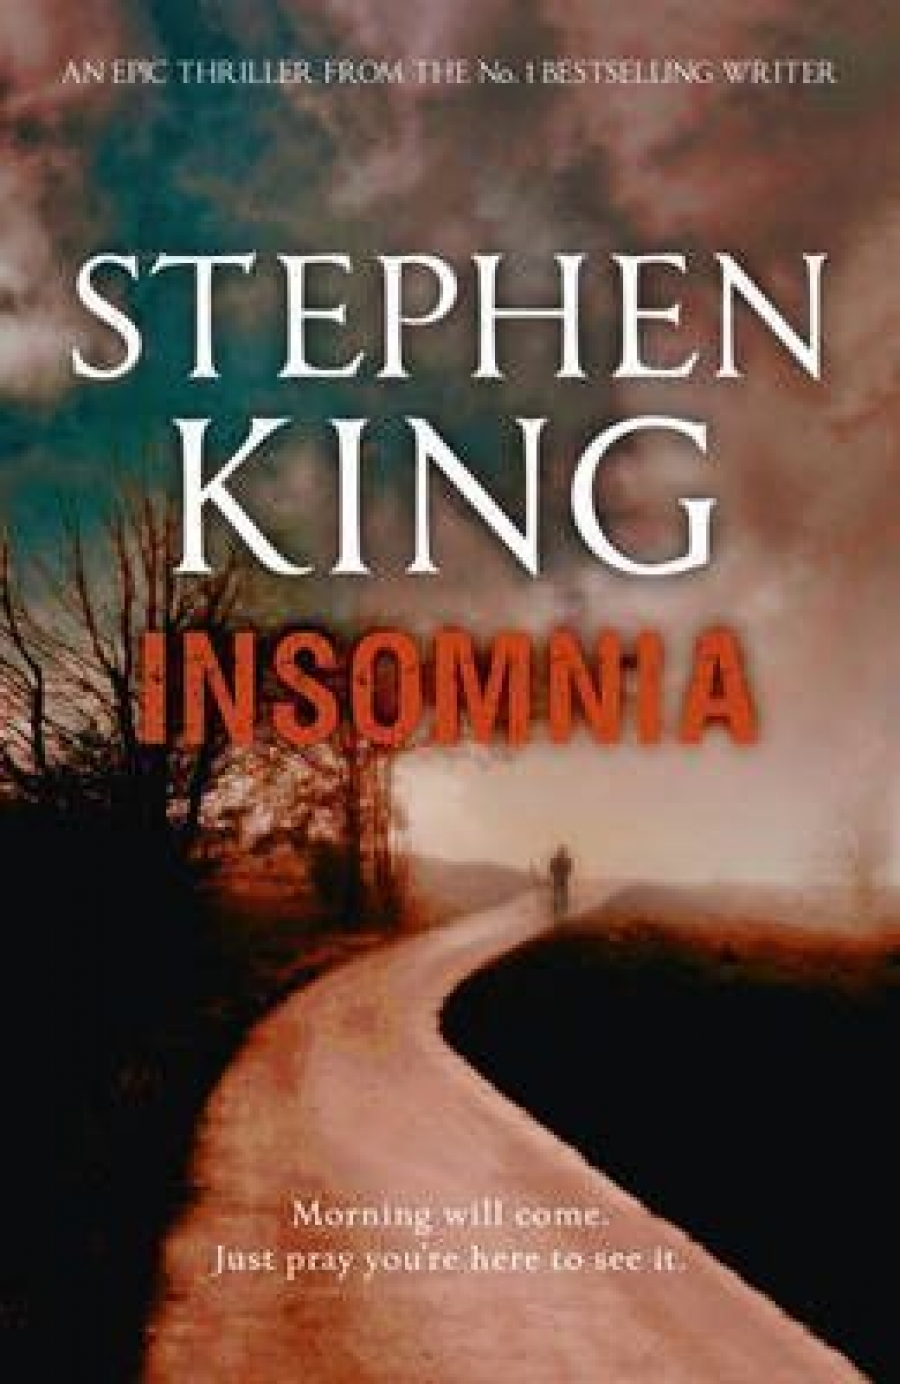 King Stephen Insomnia 